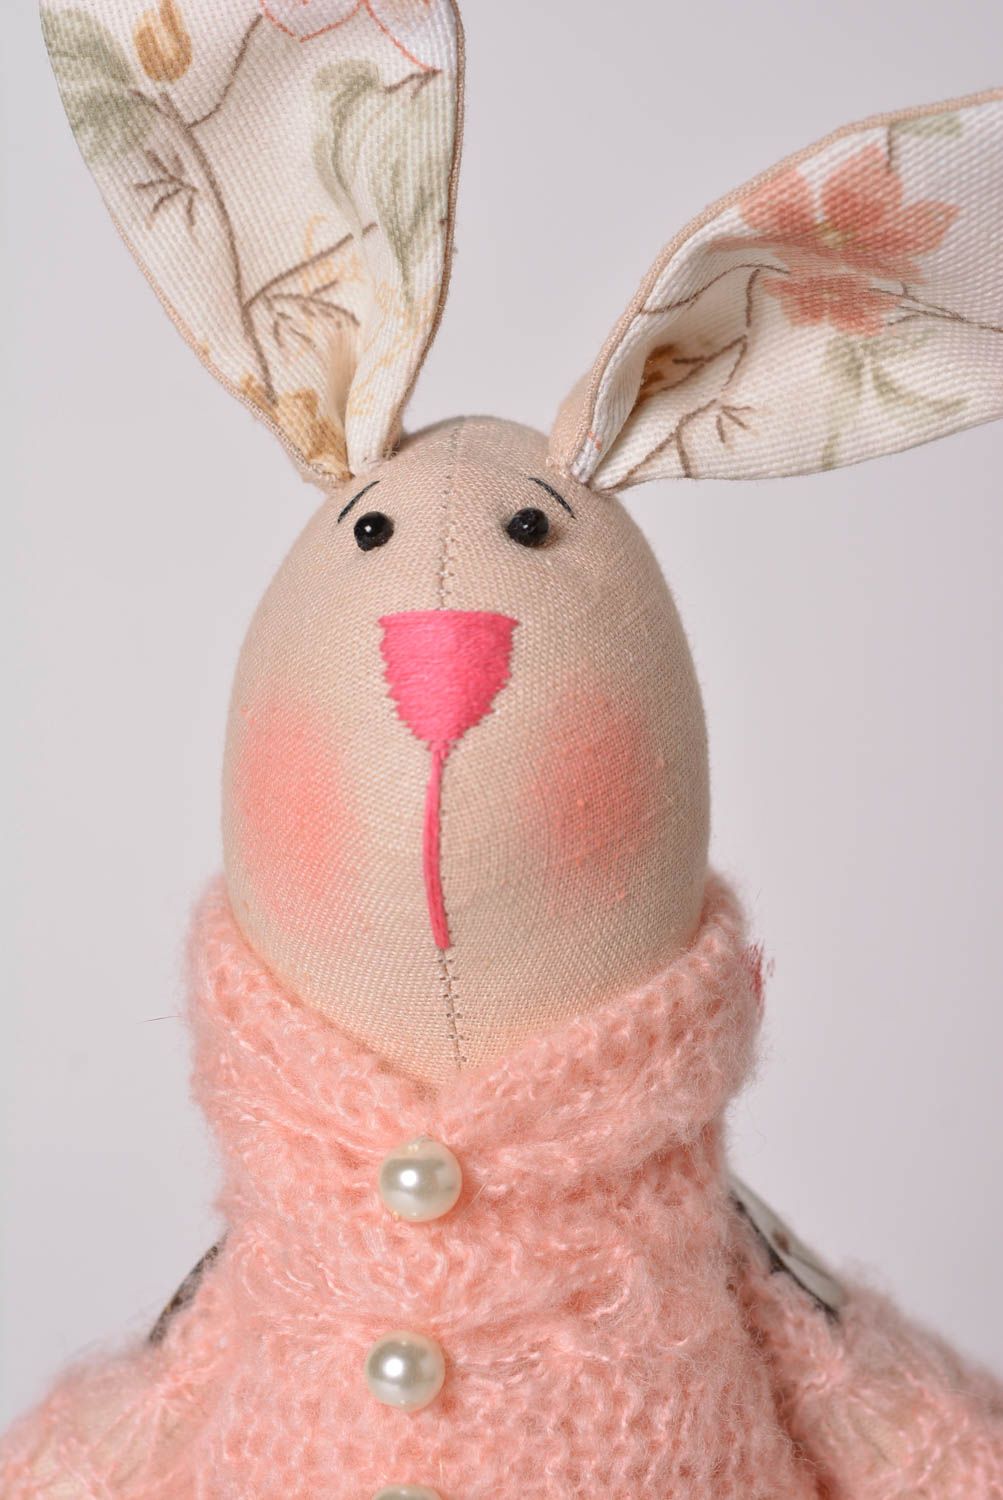 Handcrafted toy designer playroom interior decor toy hare stylish gift idea photo 4